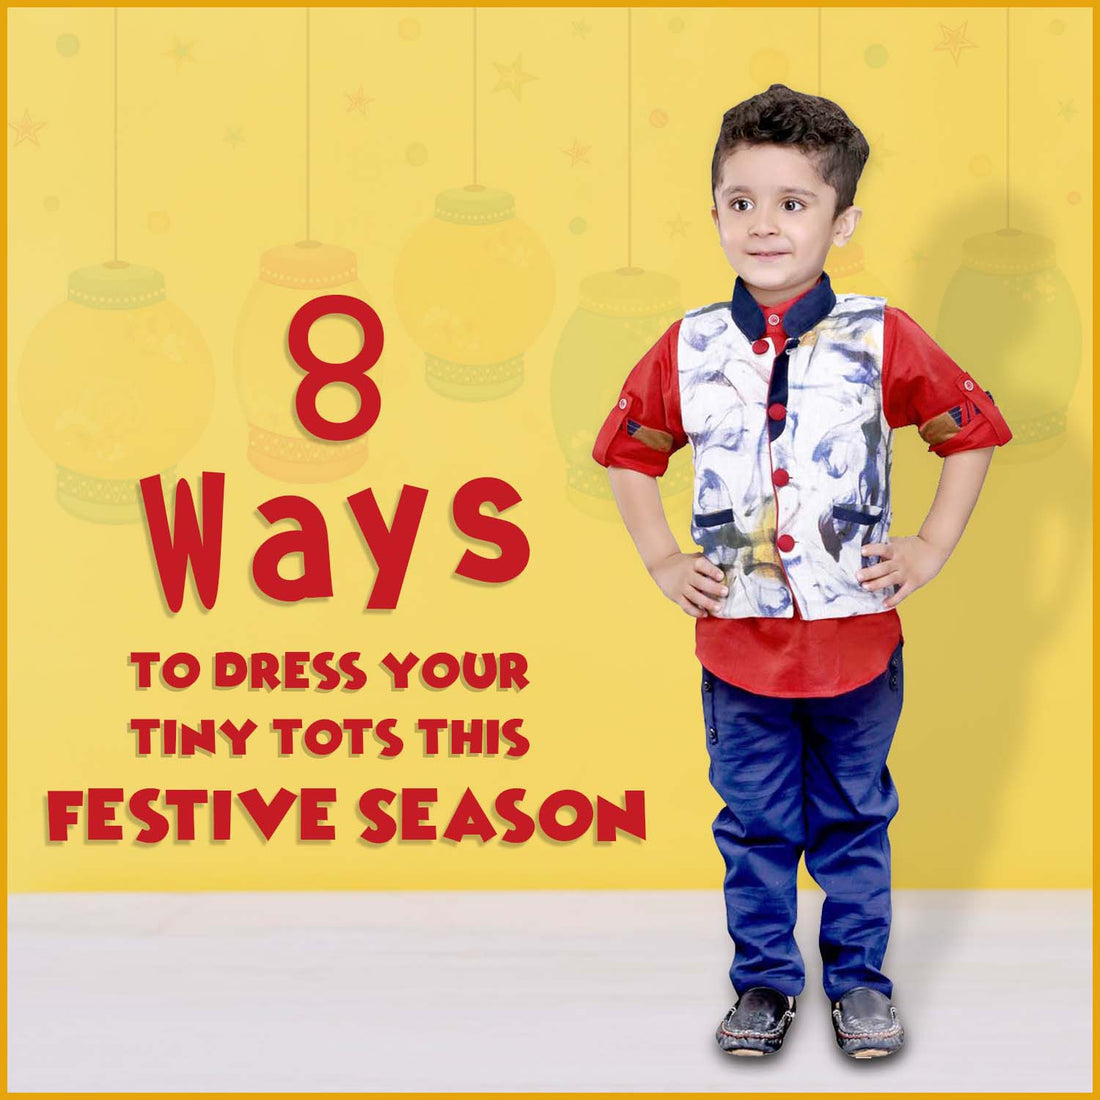 8 Ways To Dress Your Tiny Tots This Festive Season